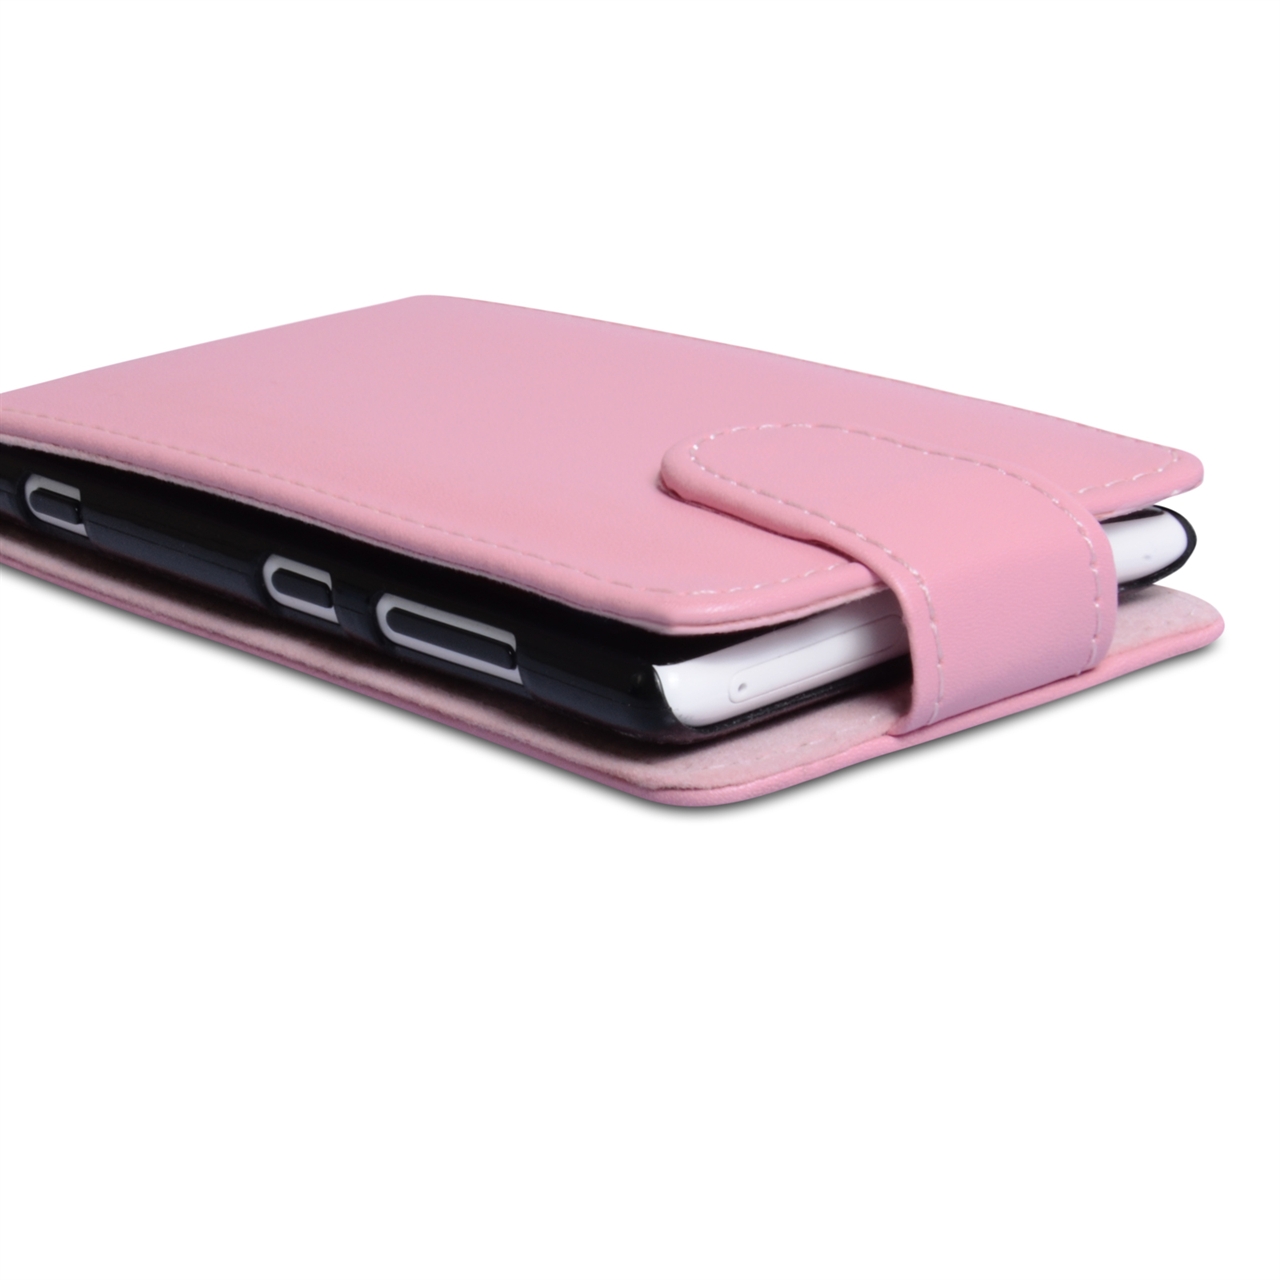 YouSave Nokia Lumia 720 Leather Effect Flip Case - Baby Pink